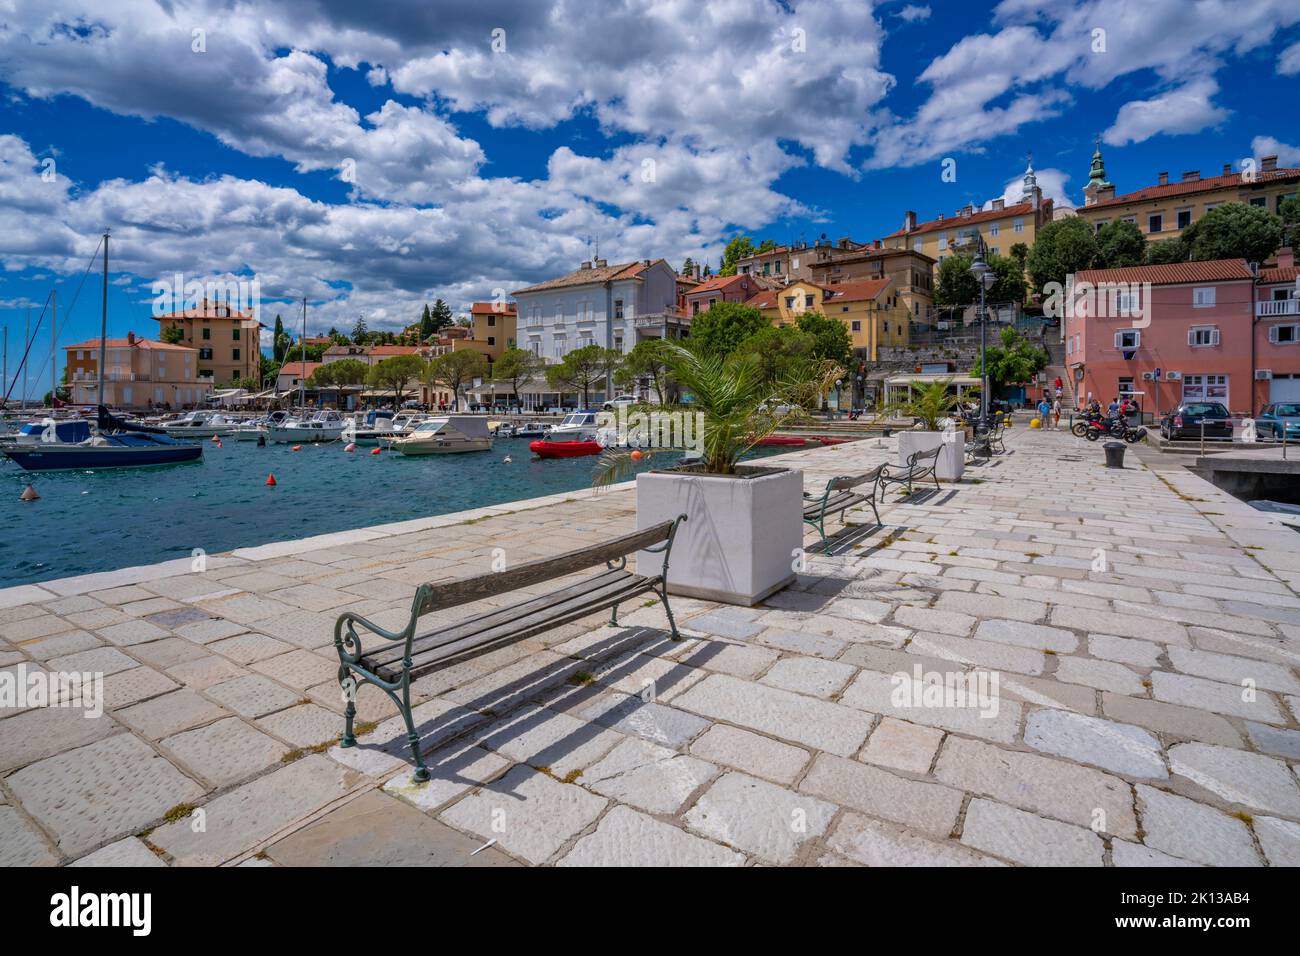 View of hotels and church overlooking marina at Volosko, Kvarner Bay, Eastern Istria, Croatia, Europe Stock Photo